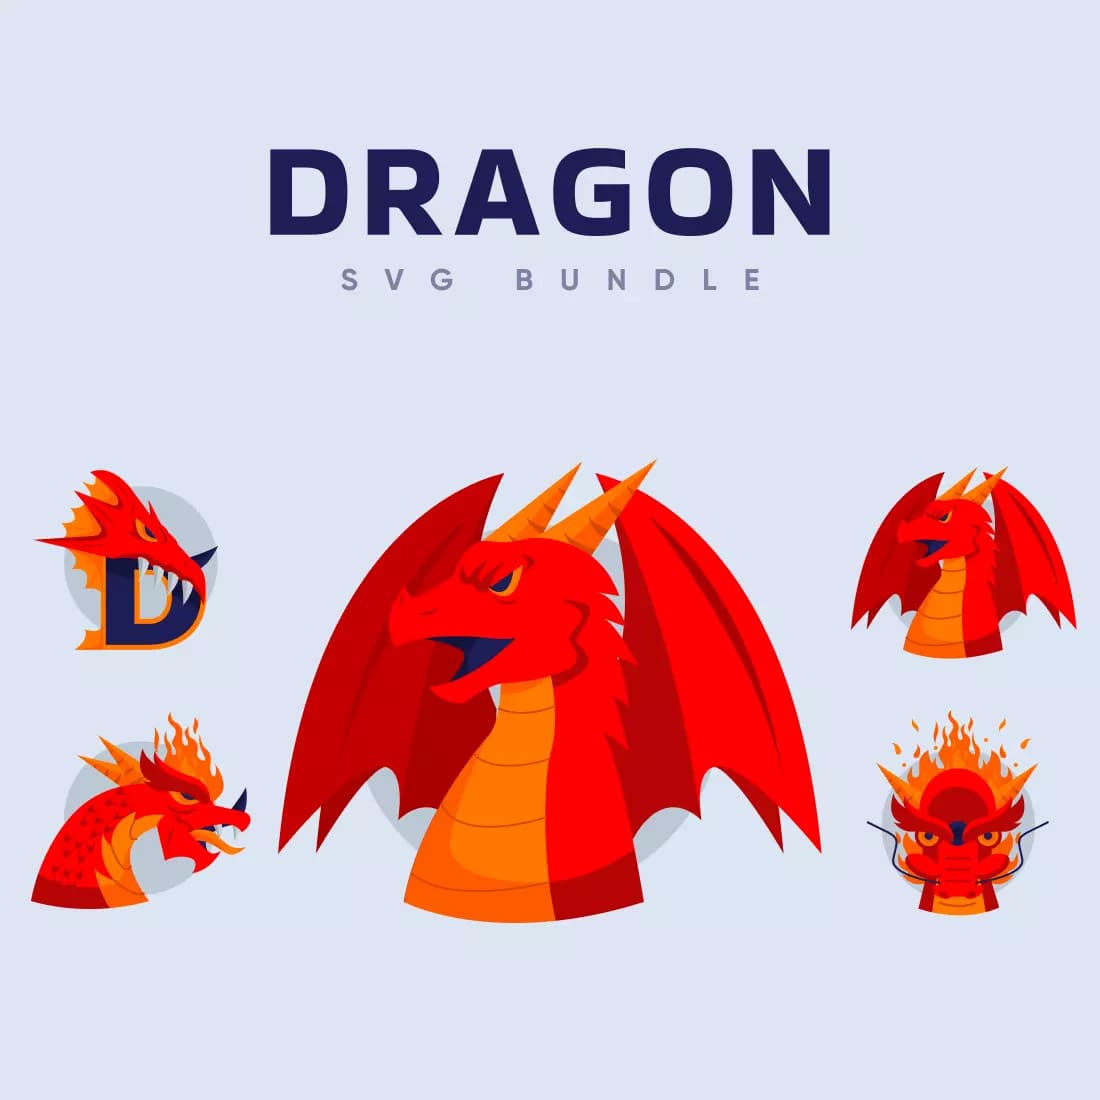 Dragon SVG Bundle preview image.